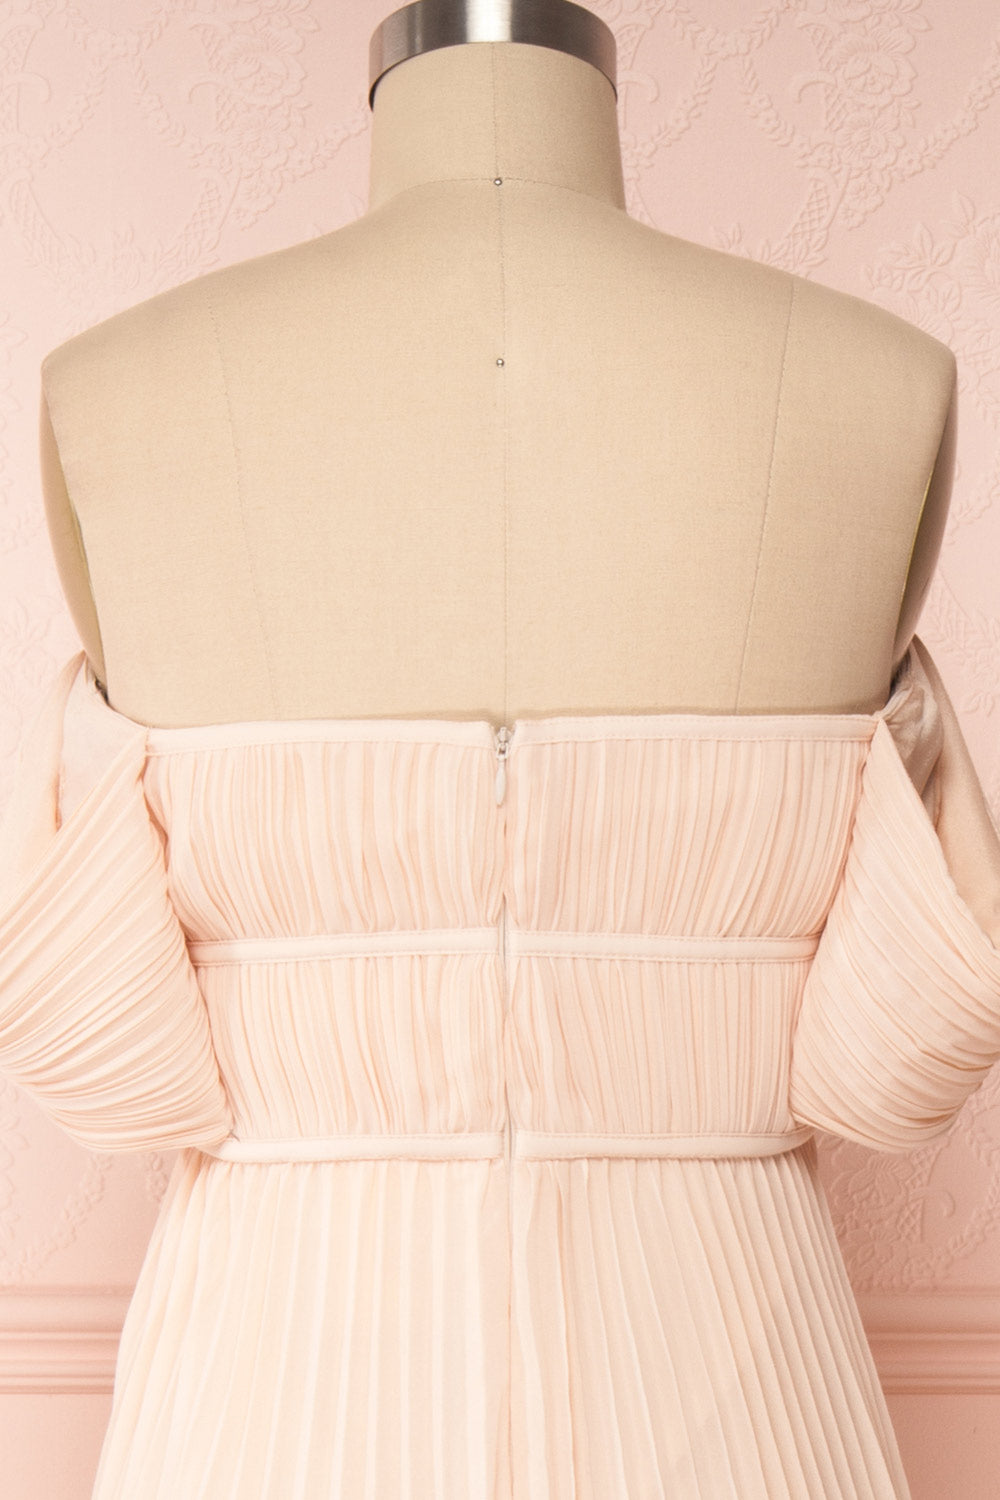 Khalida Light Pink Pleated Maxi Dress back close up | Boudoir 1861